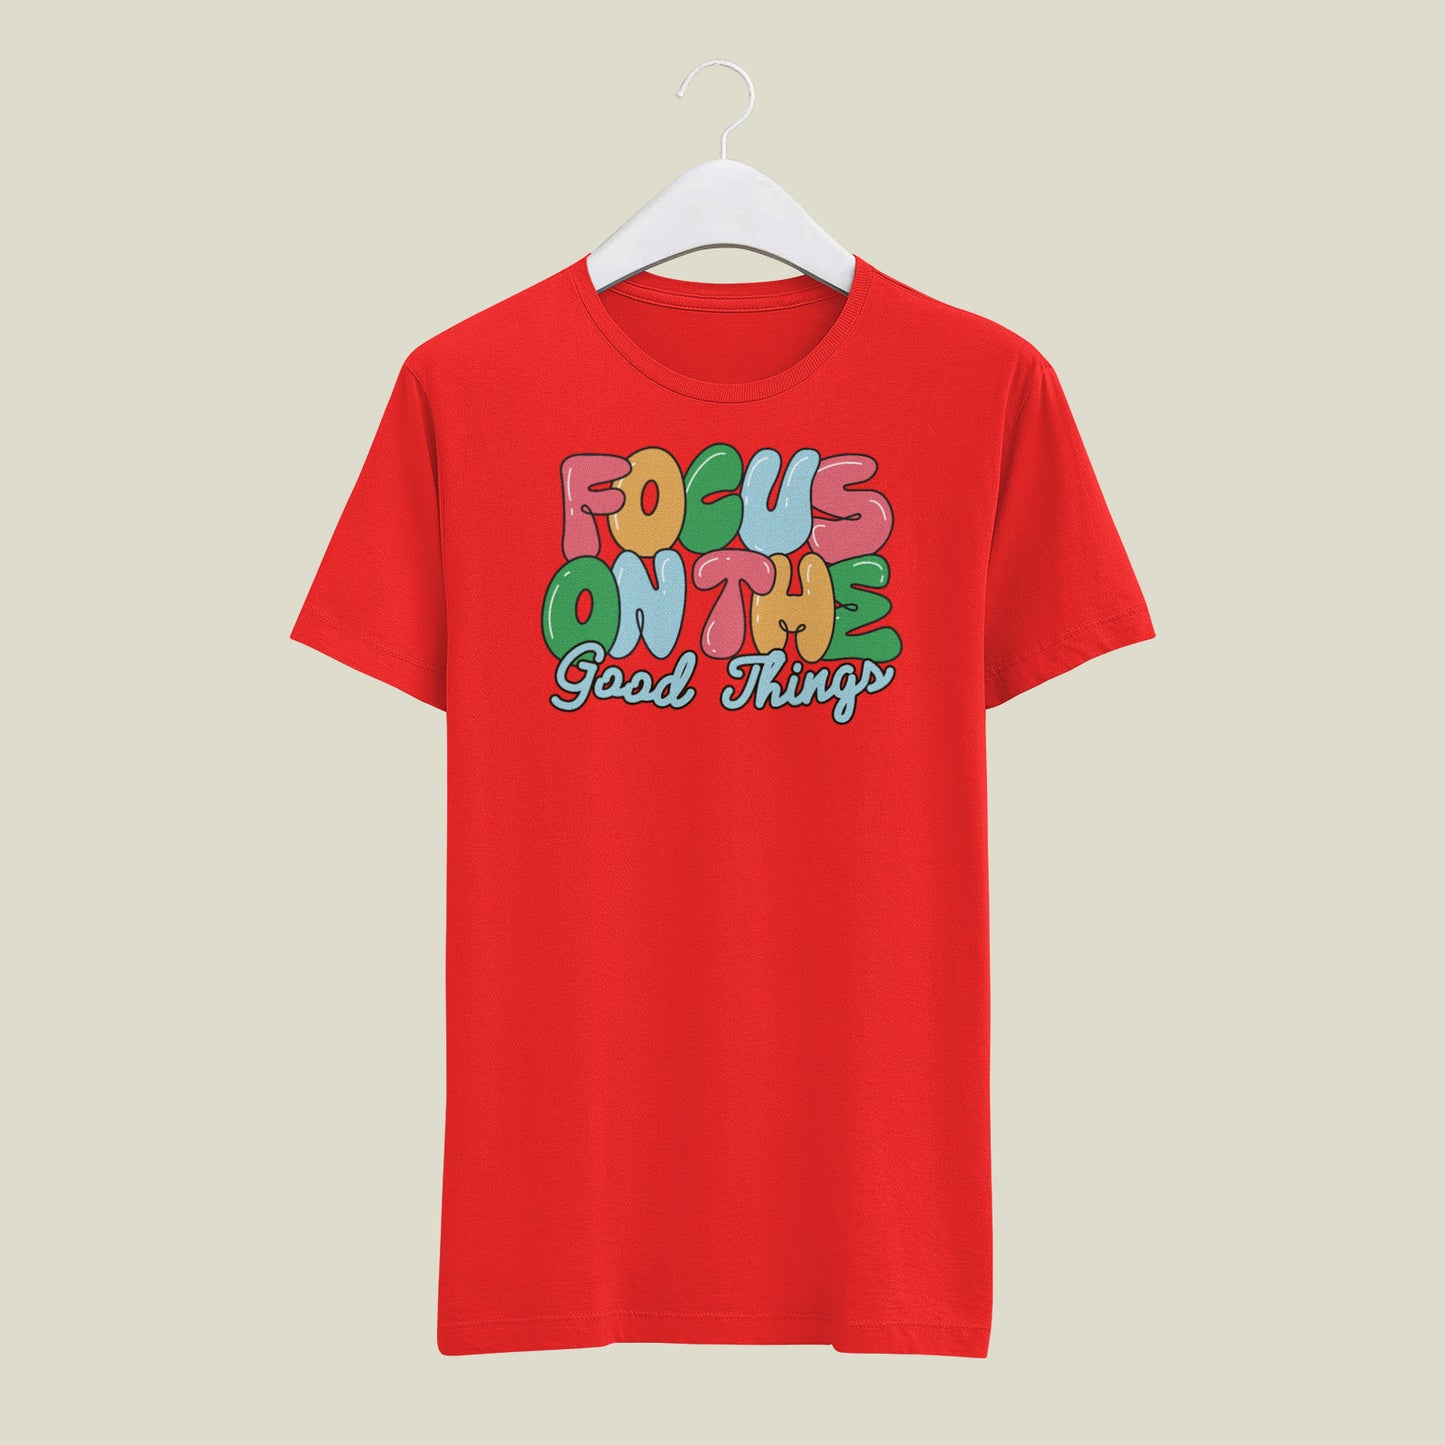 FOCUS On Good things T shirt